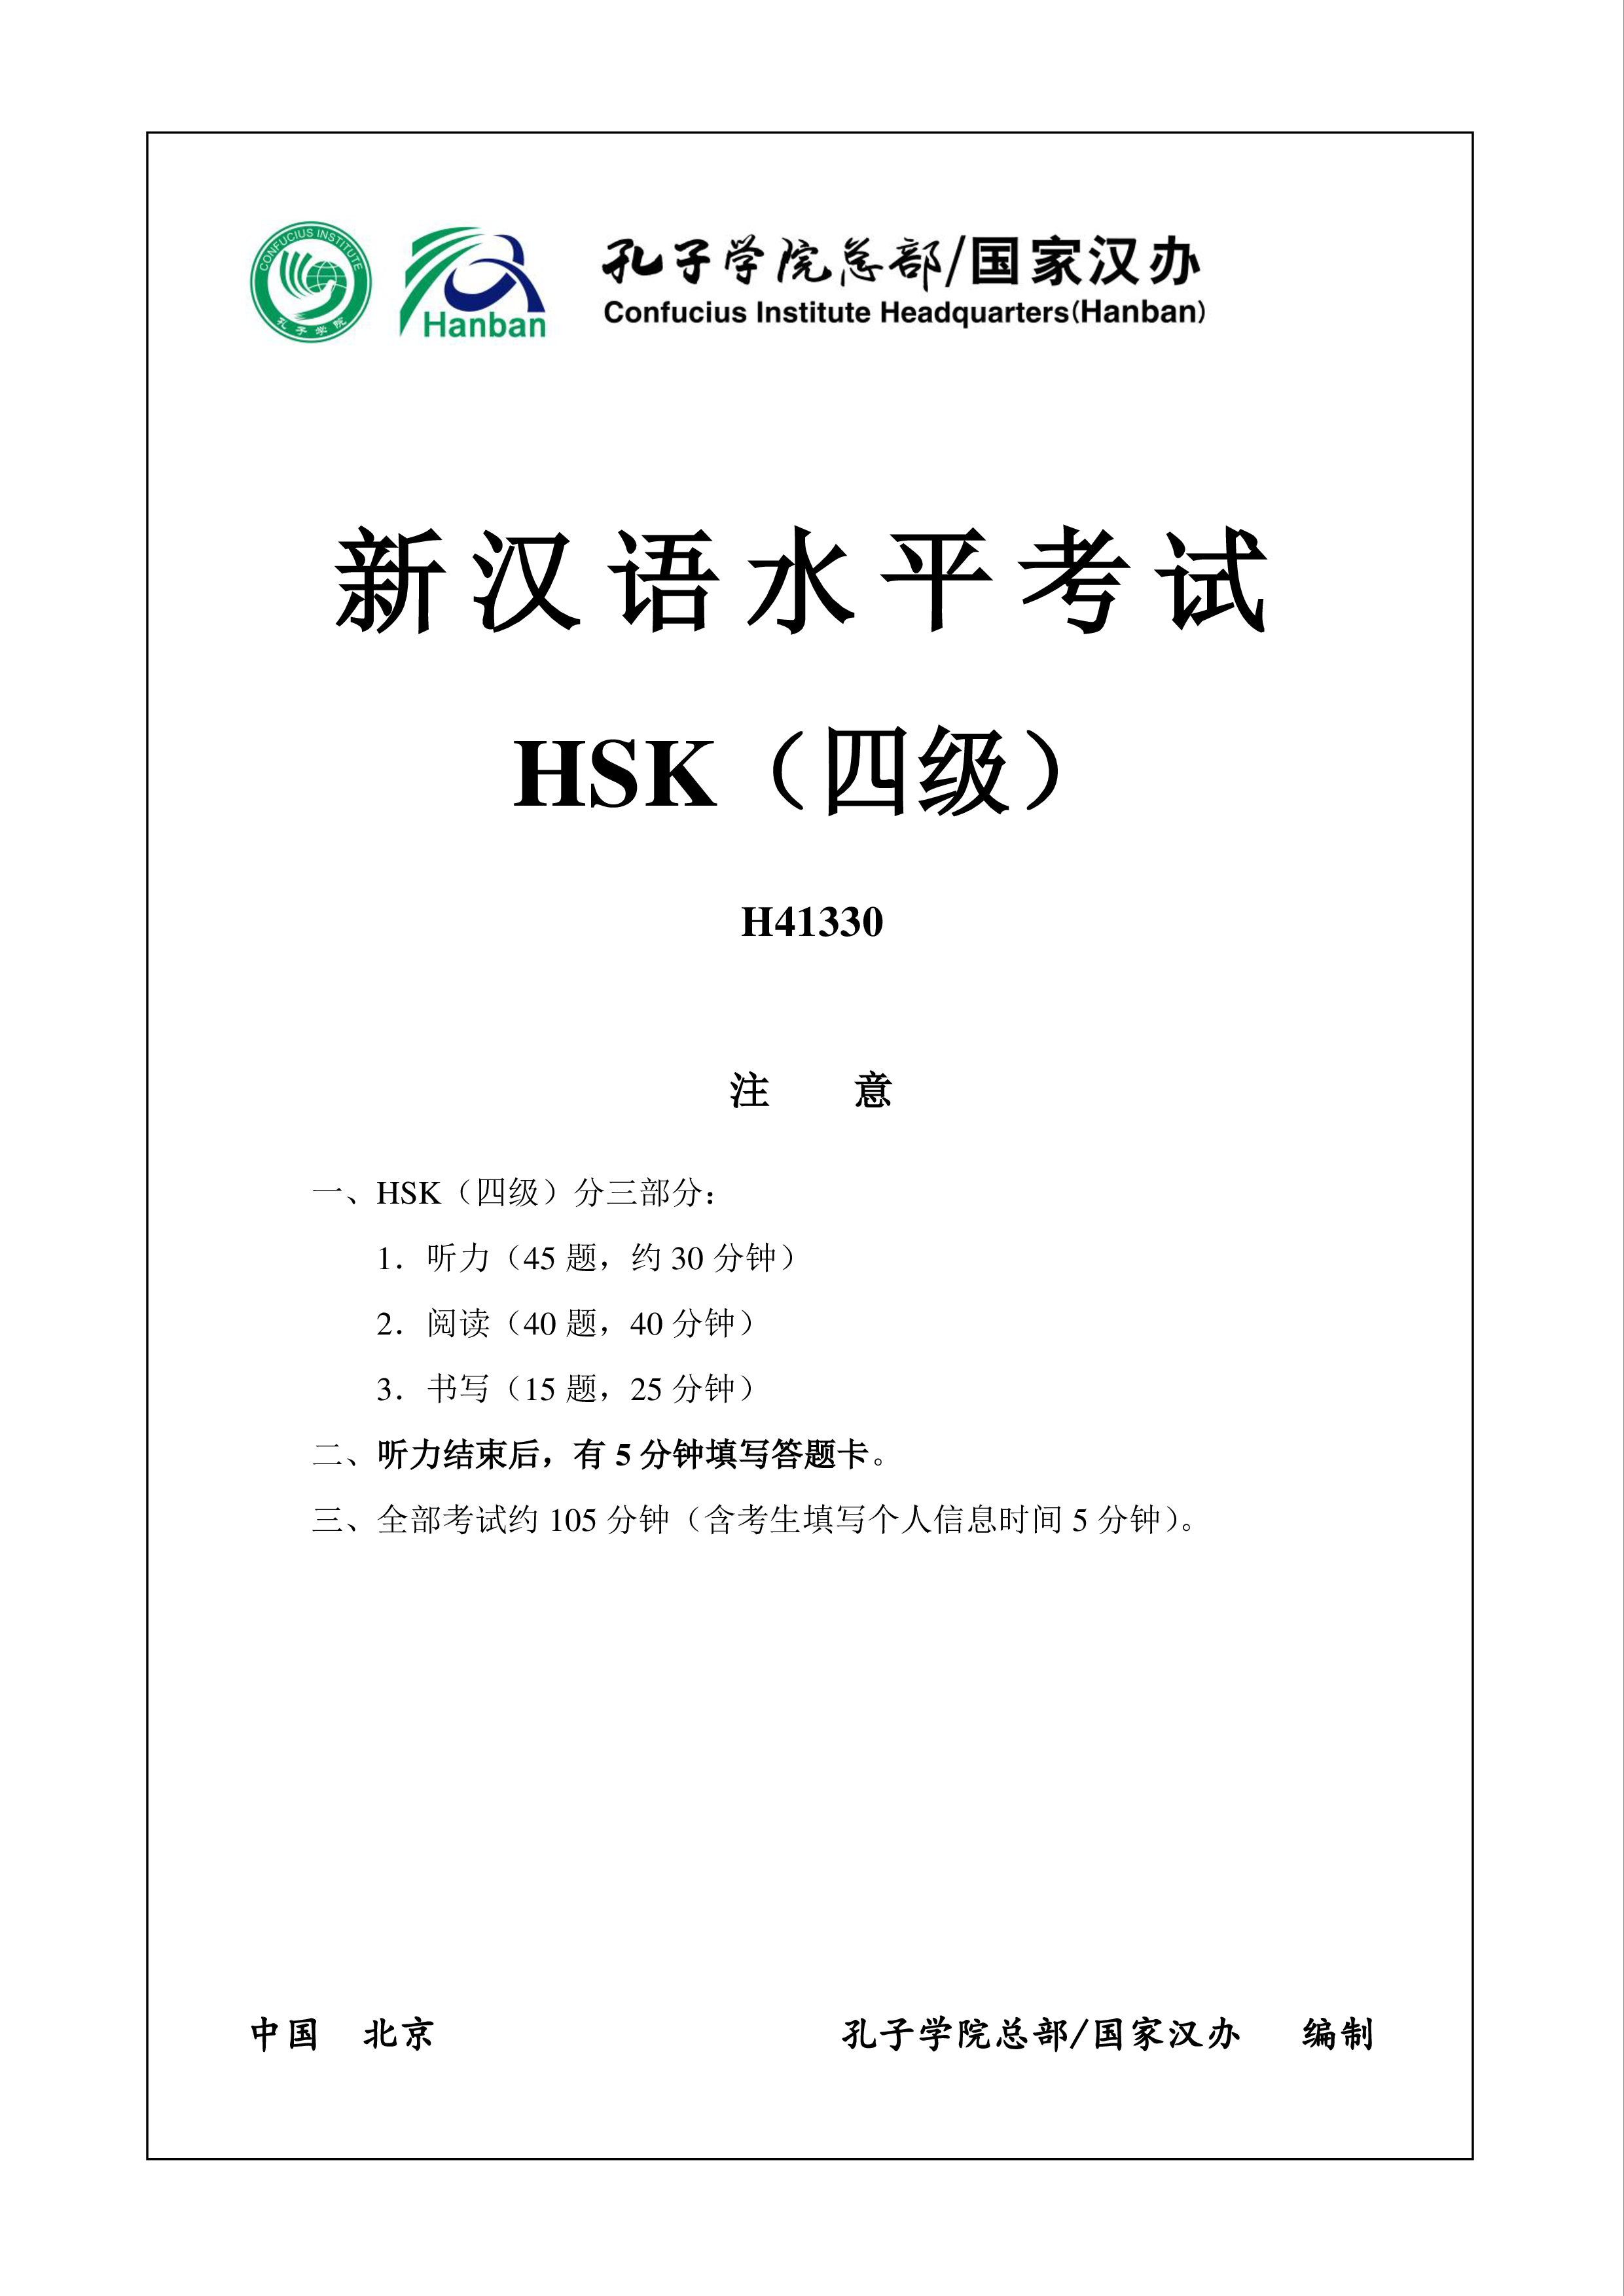 HSK4 Chinees Examen H41330 main image